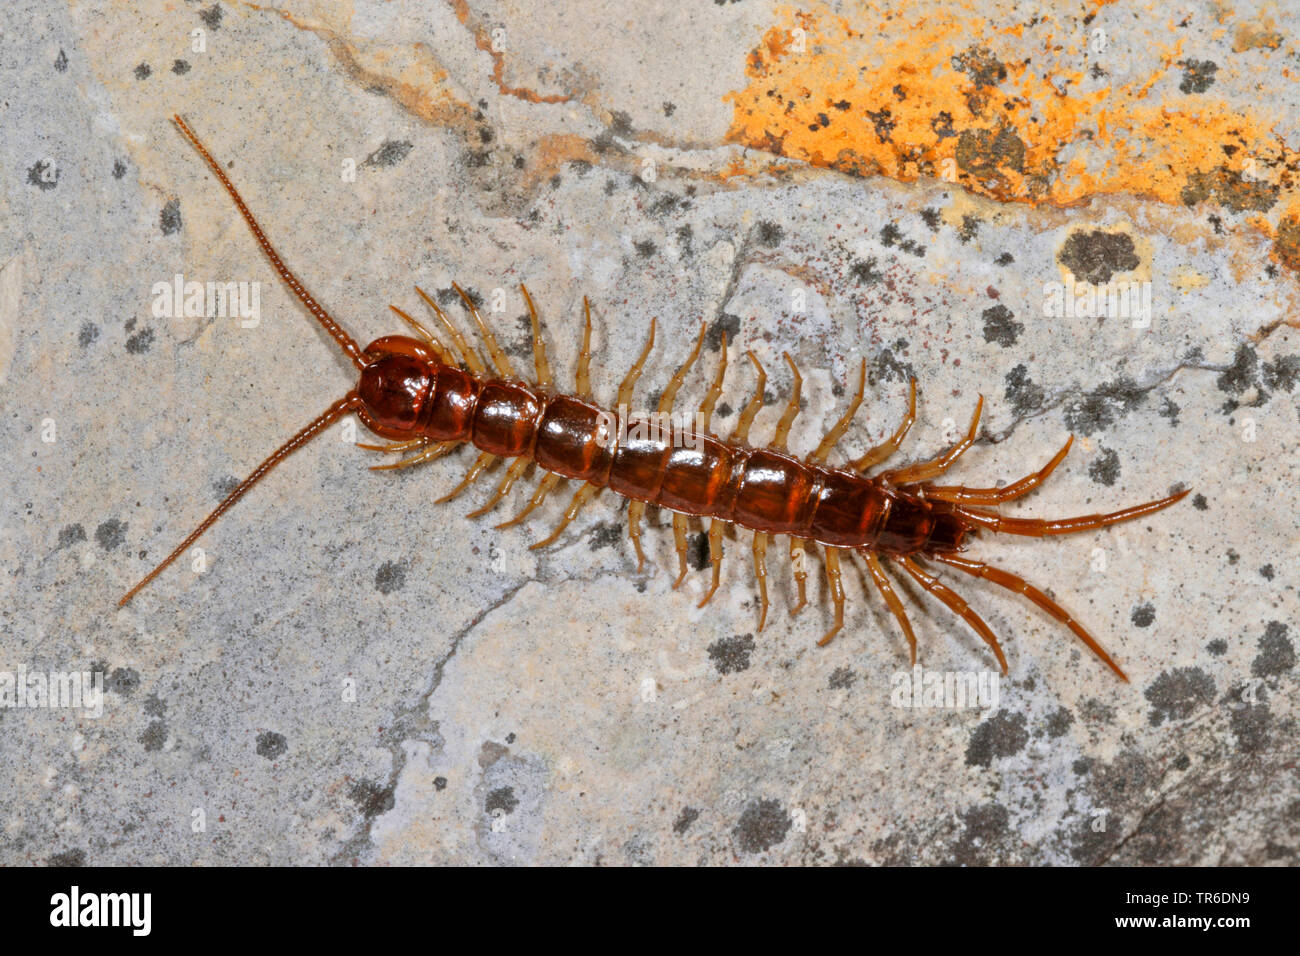 common garden centipede, brown centipede, stone centipede (Lithobius forficatus), top view, Germany Stock Photo